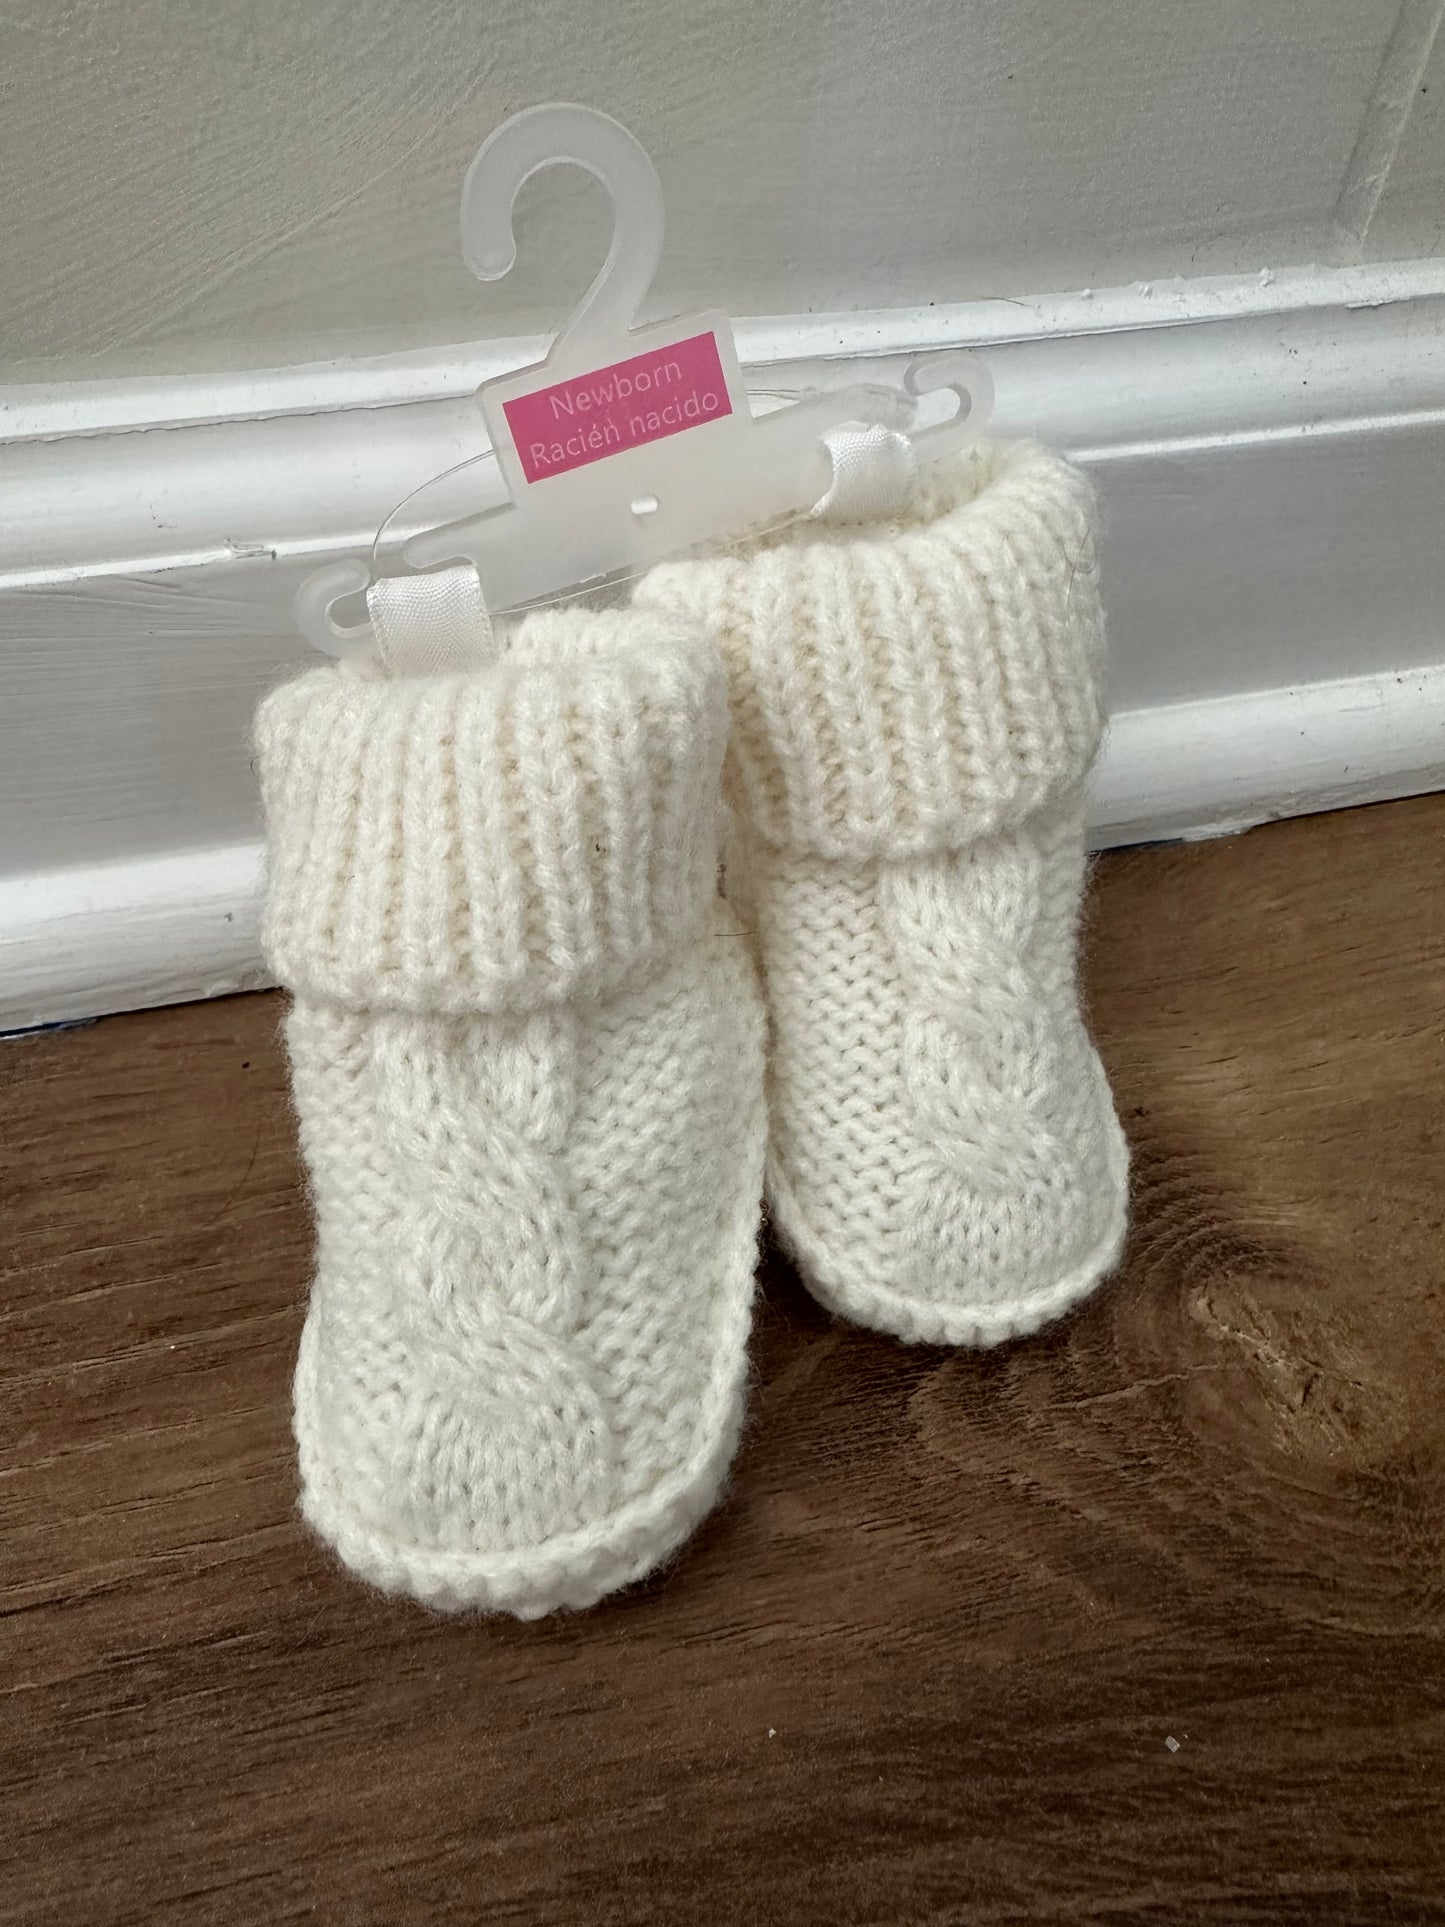 NWT Newborn white sweater material booties